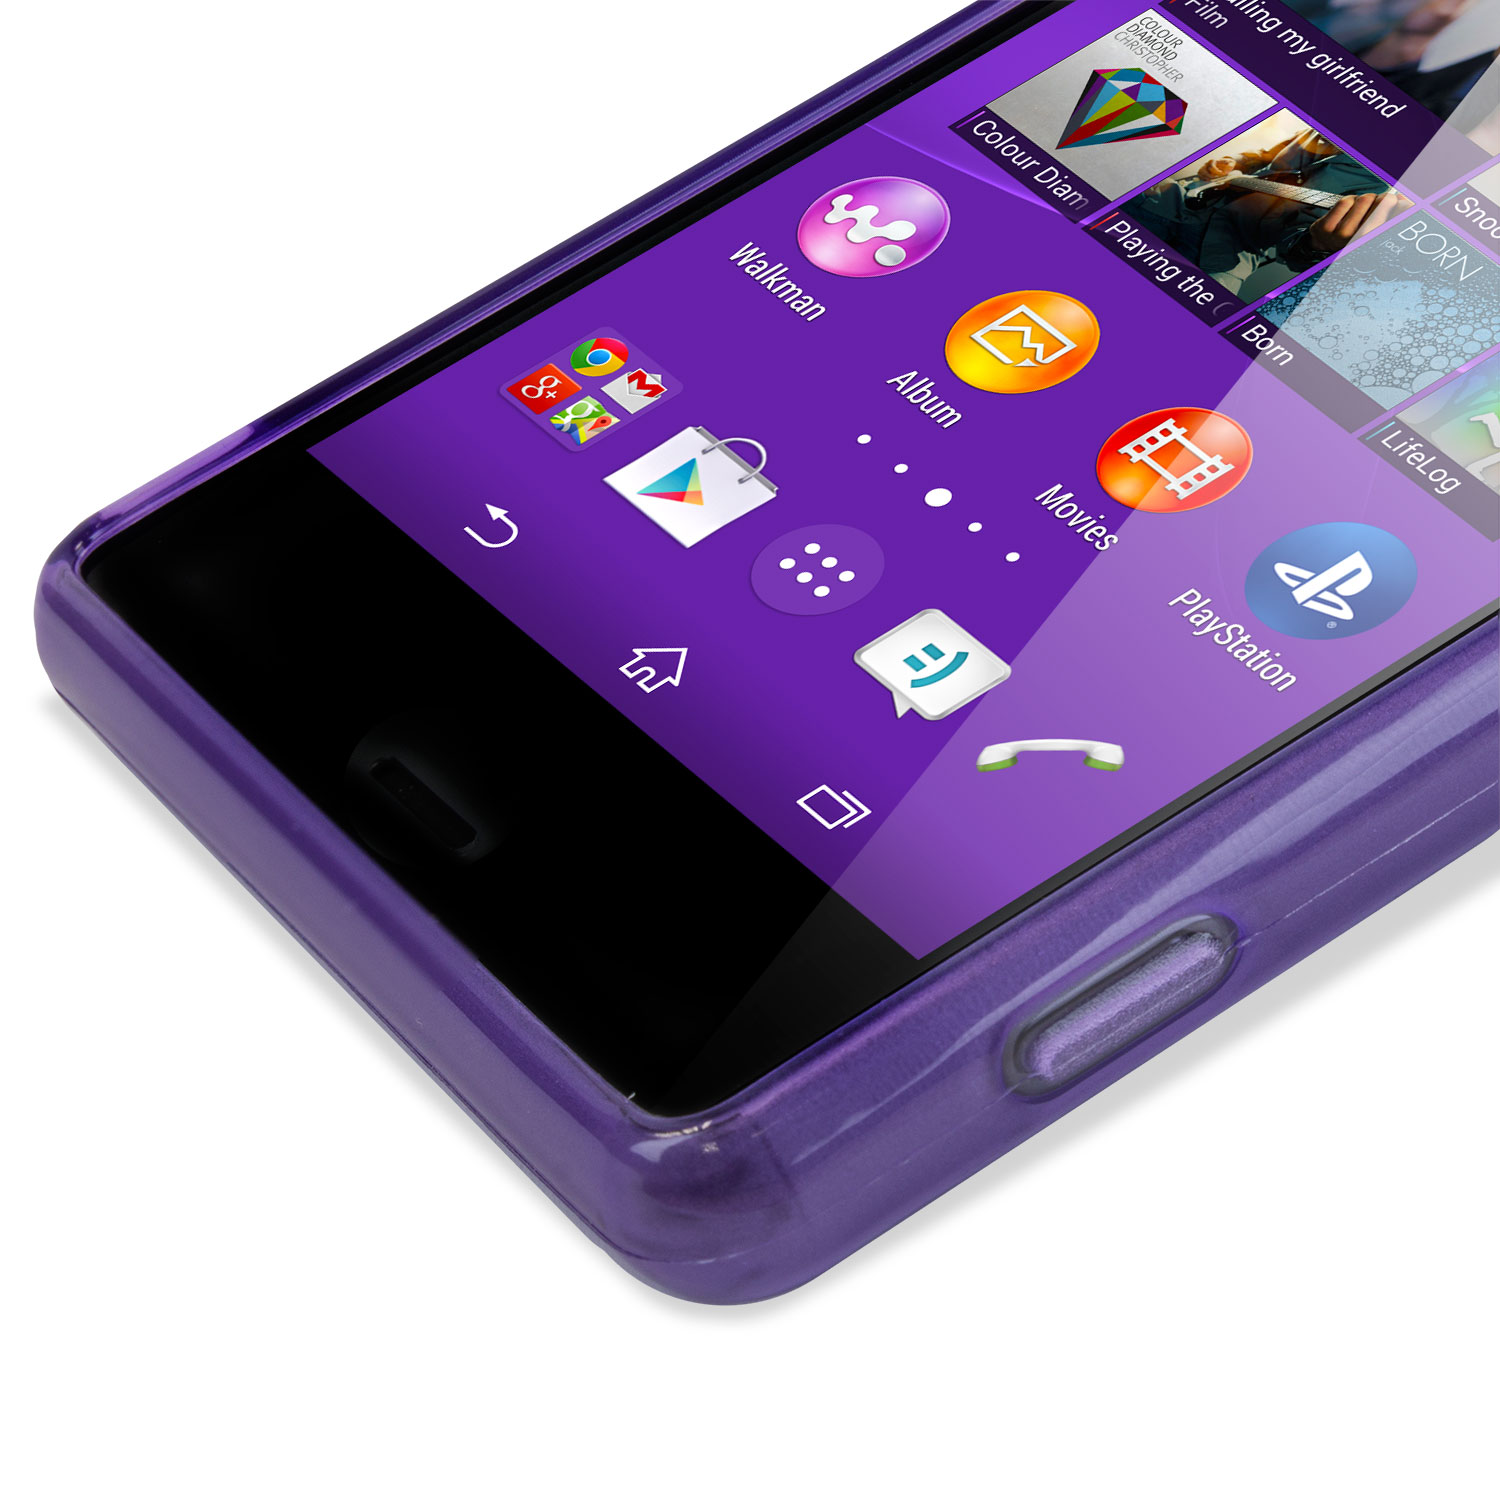 FlexiShield Sony Xperia Z3 Case - Purple